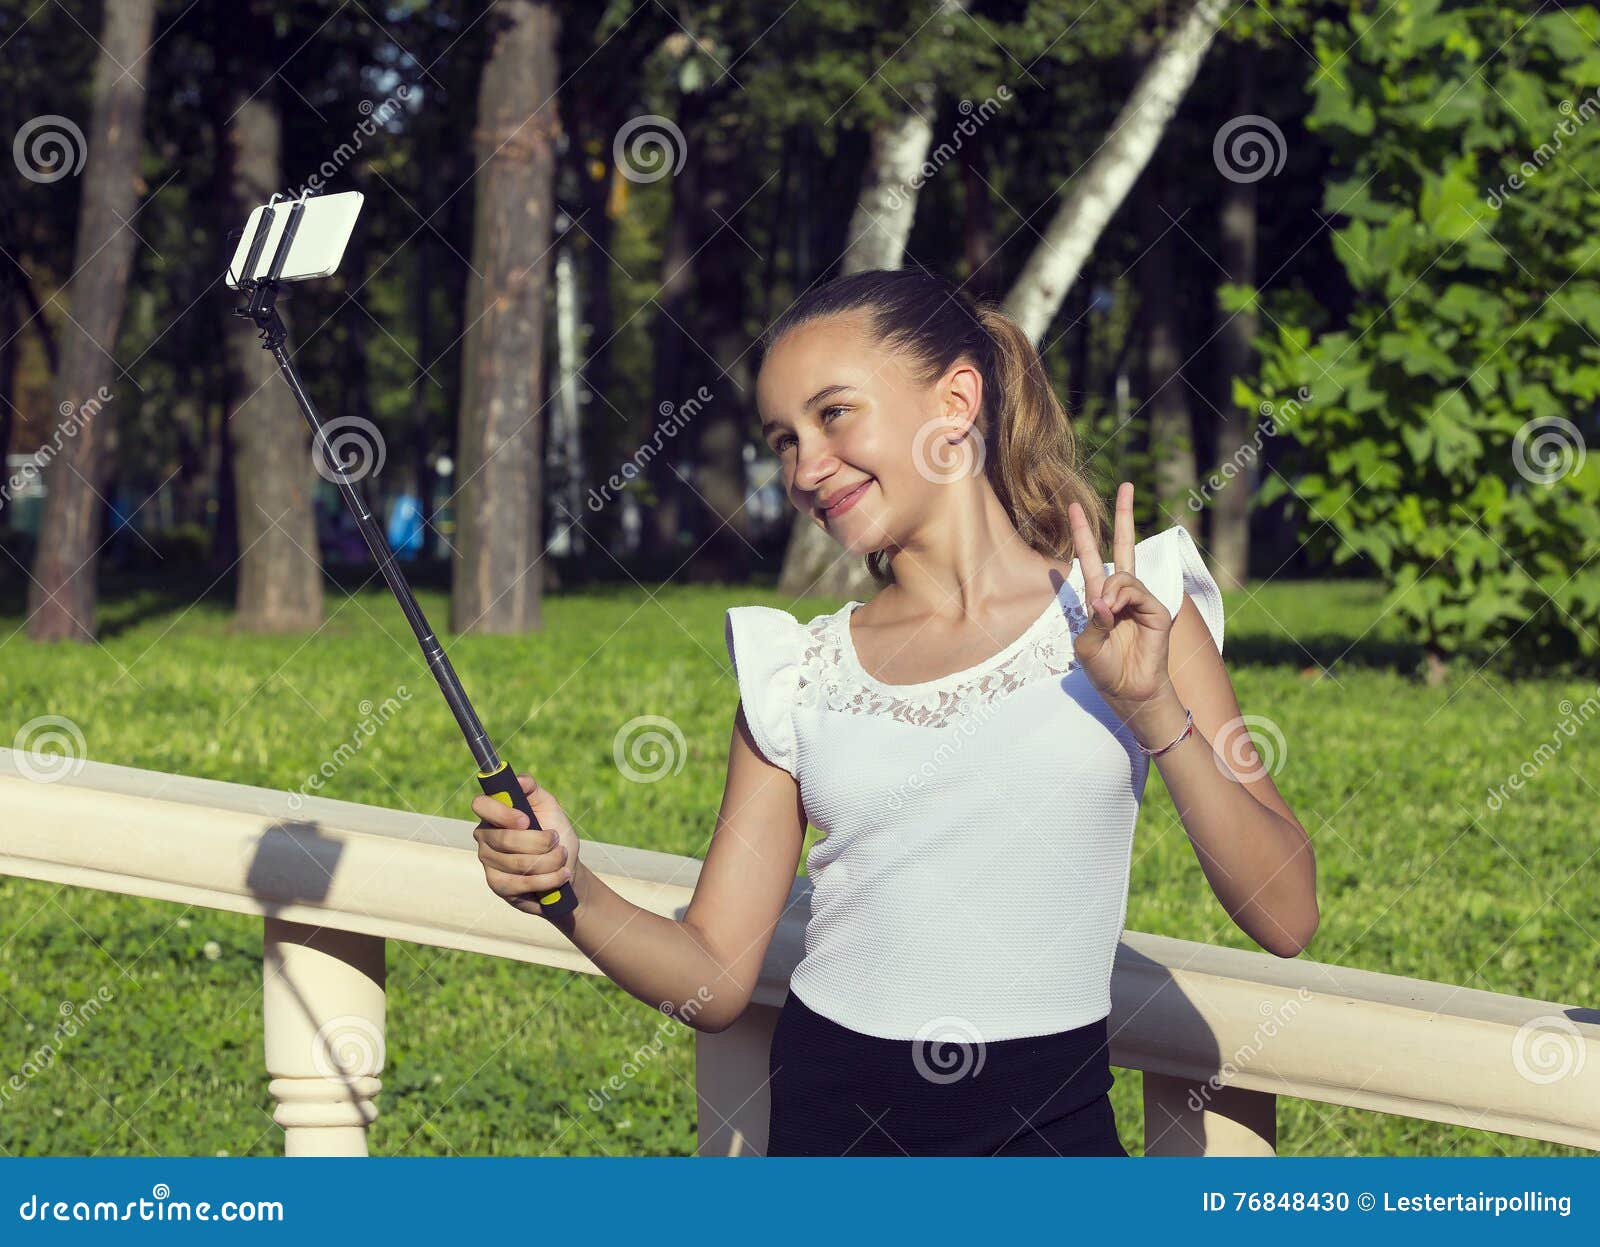 Delightful Girl Doing Selfie Photos - Free & Royalty-Free Stock Photos